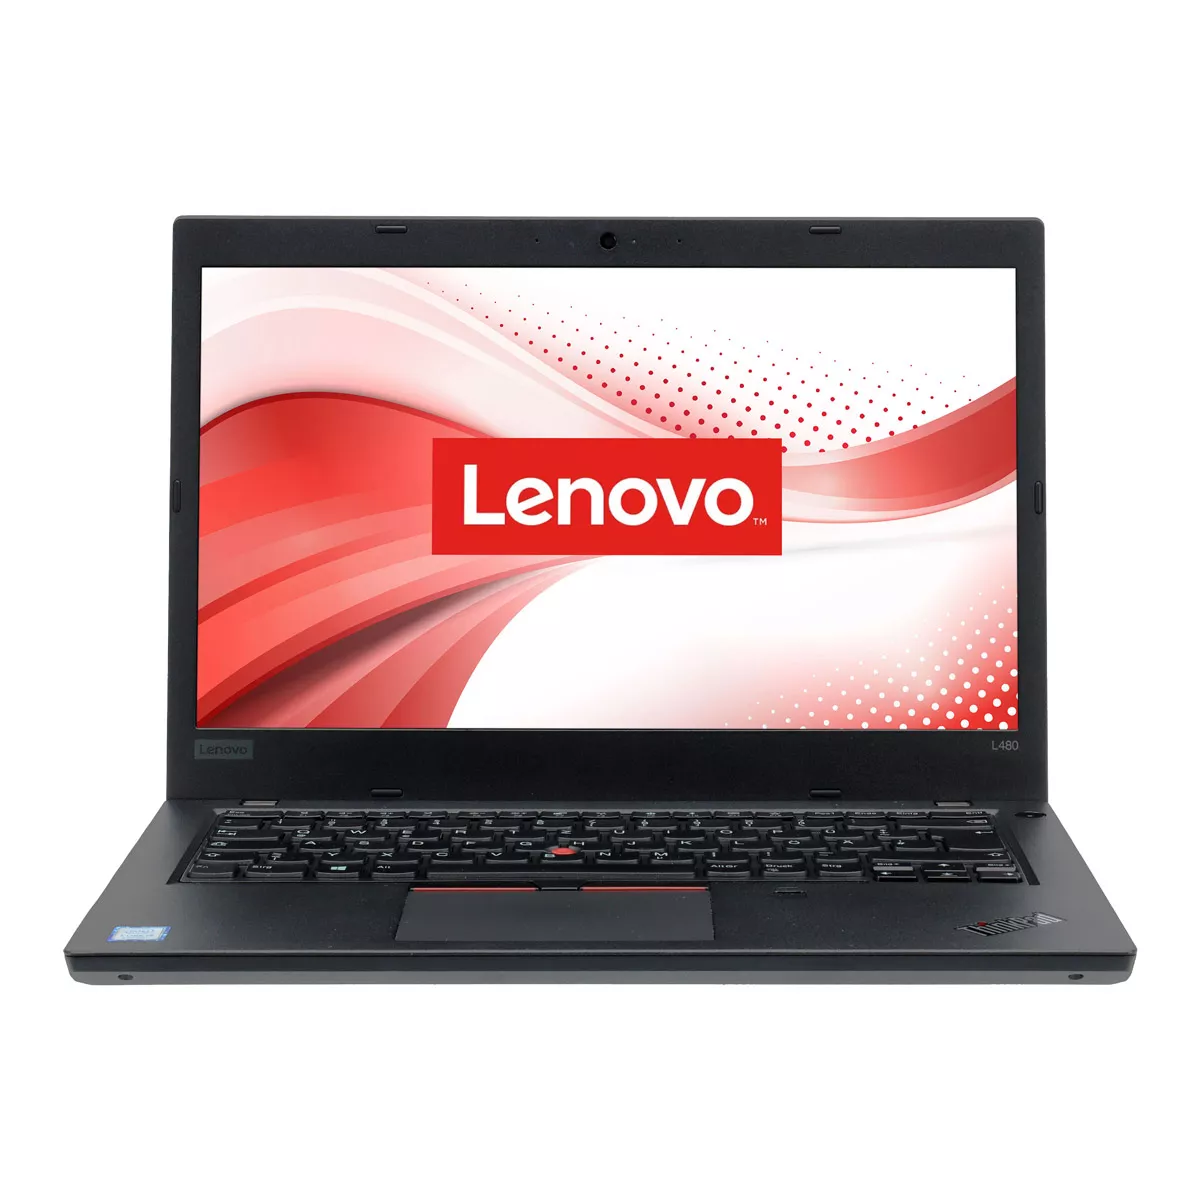 Lenovo ThinkPad L480 Core i5 8250U Full-HD 16 GB 240 GB nVME M.2 SSD Webcam B